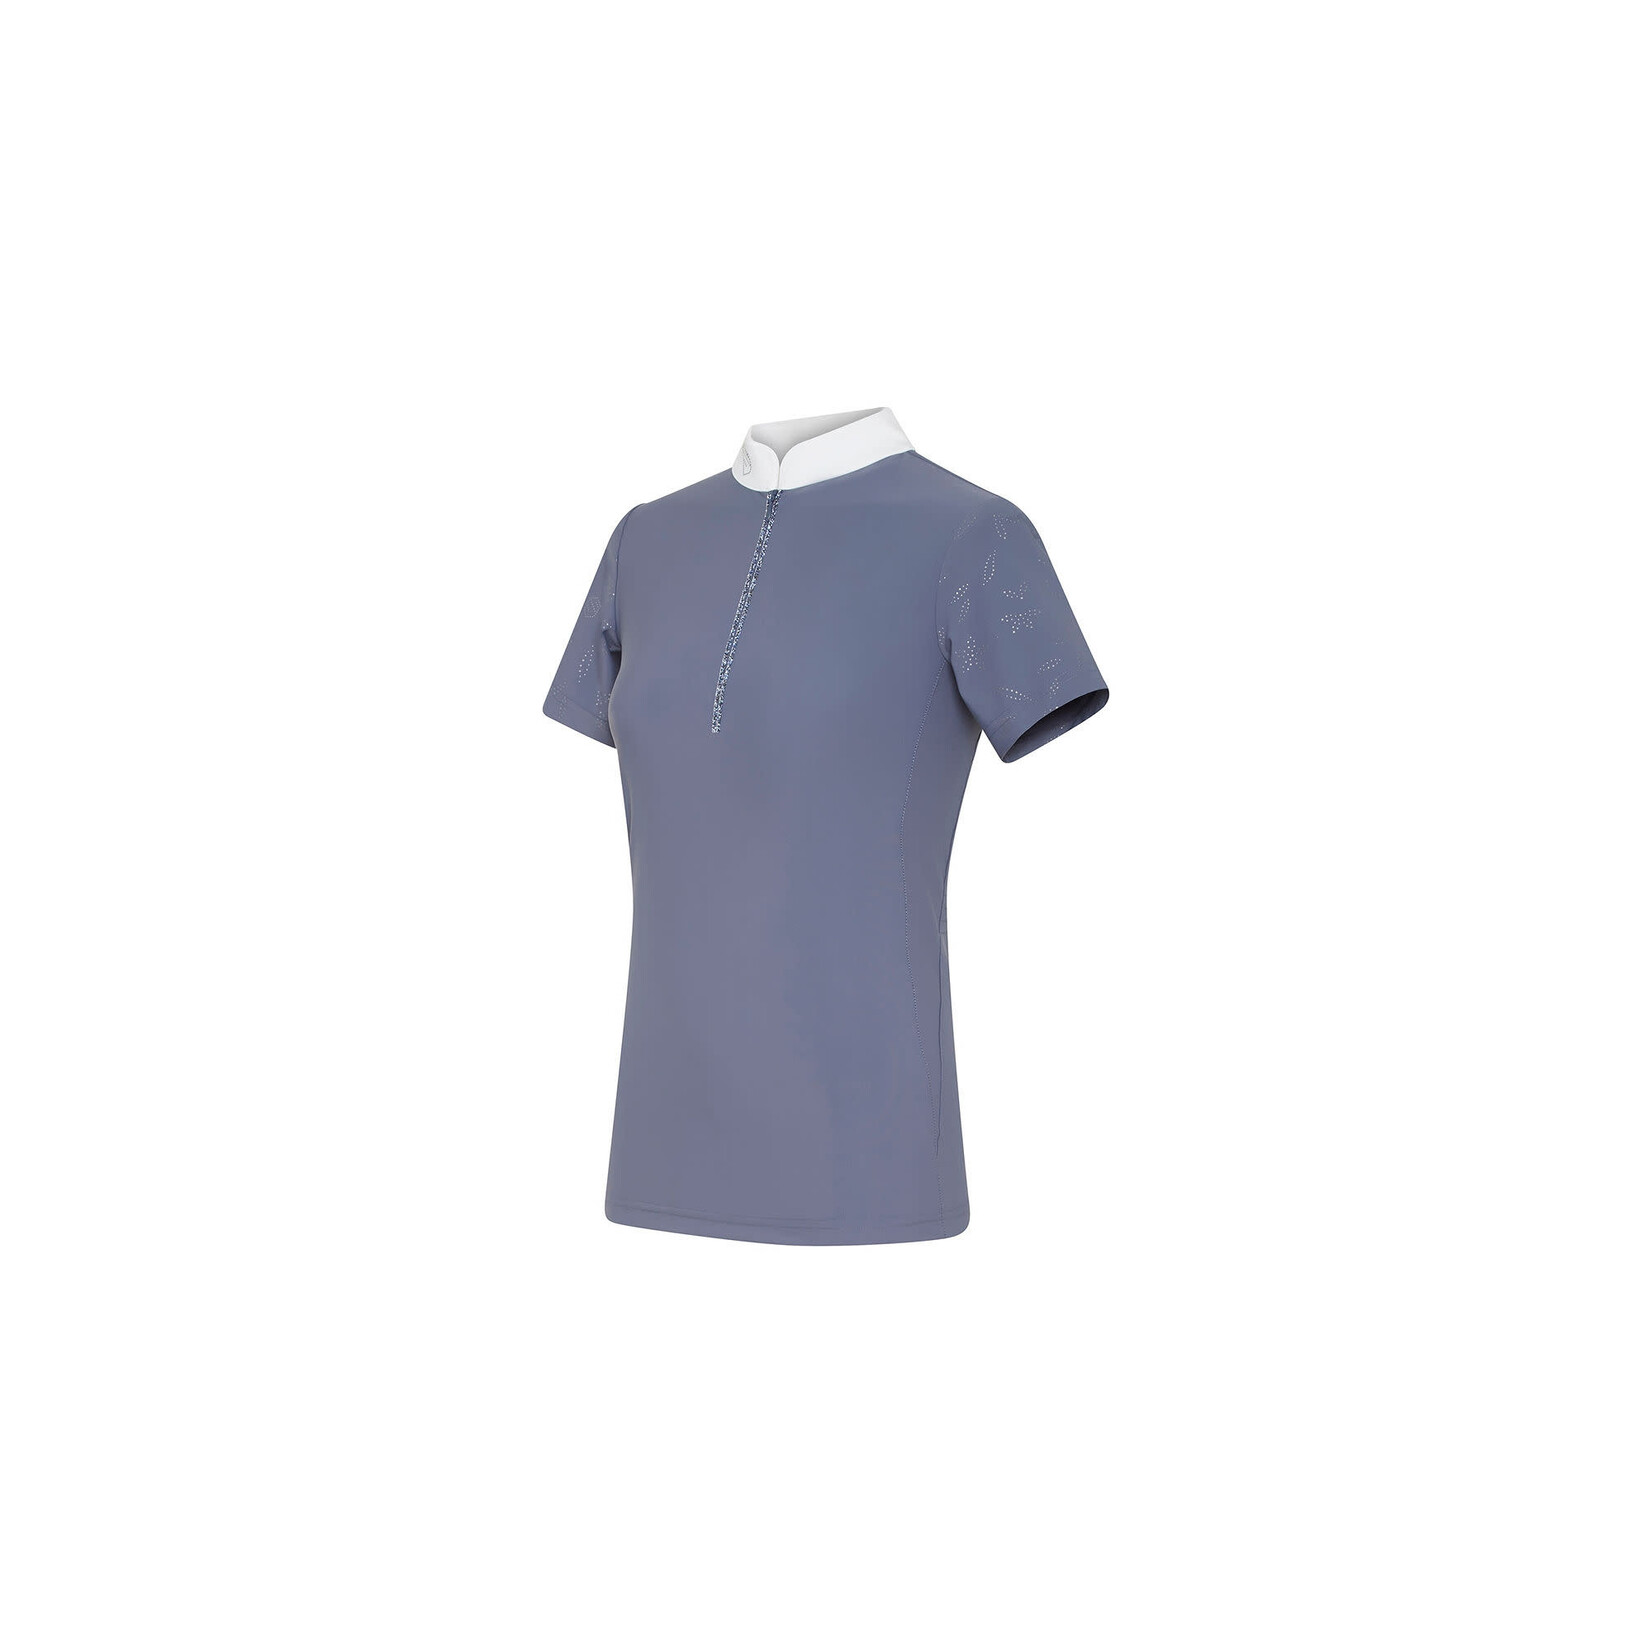 Samshield Samshield Aloise SS23 Women's Short Sleeve Shirt